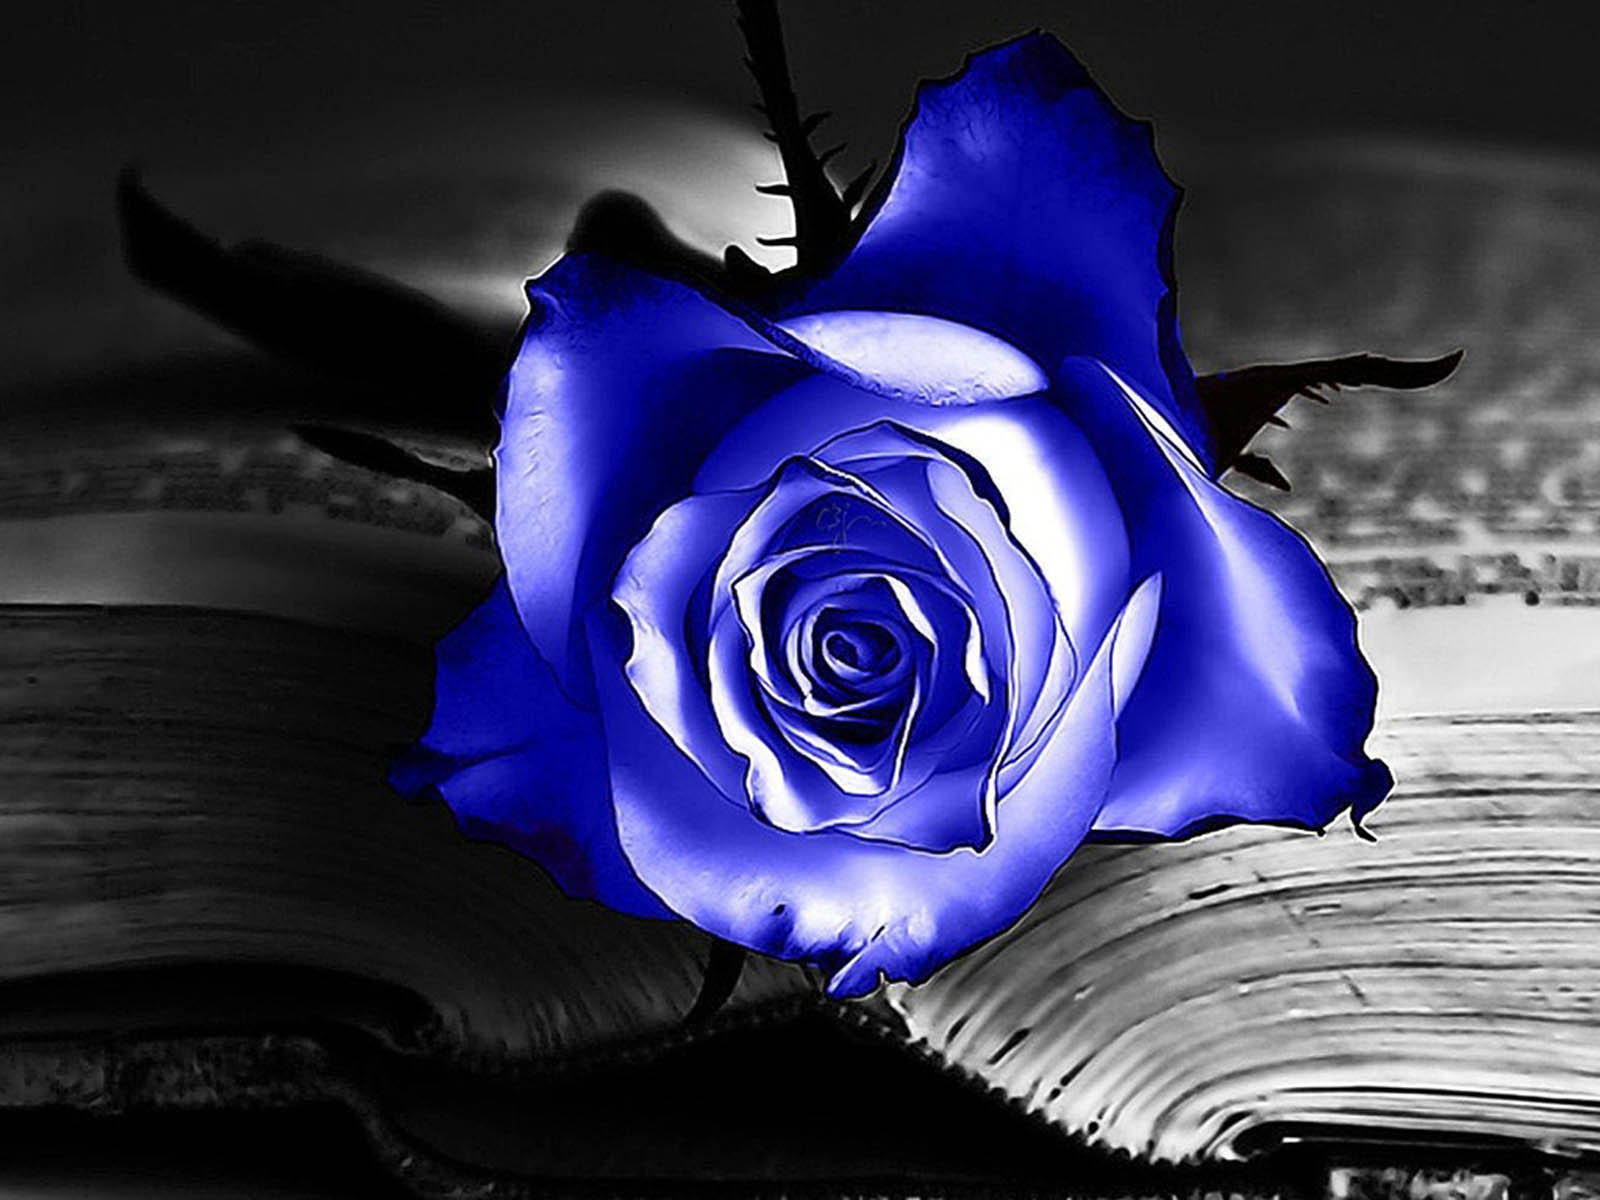 Free download blue rose wallpapers blue rose desktop wallpapers blue